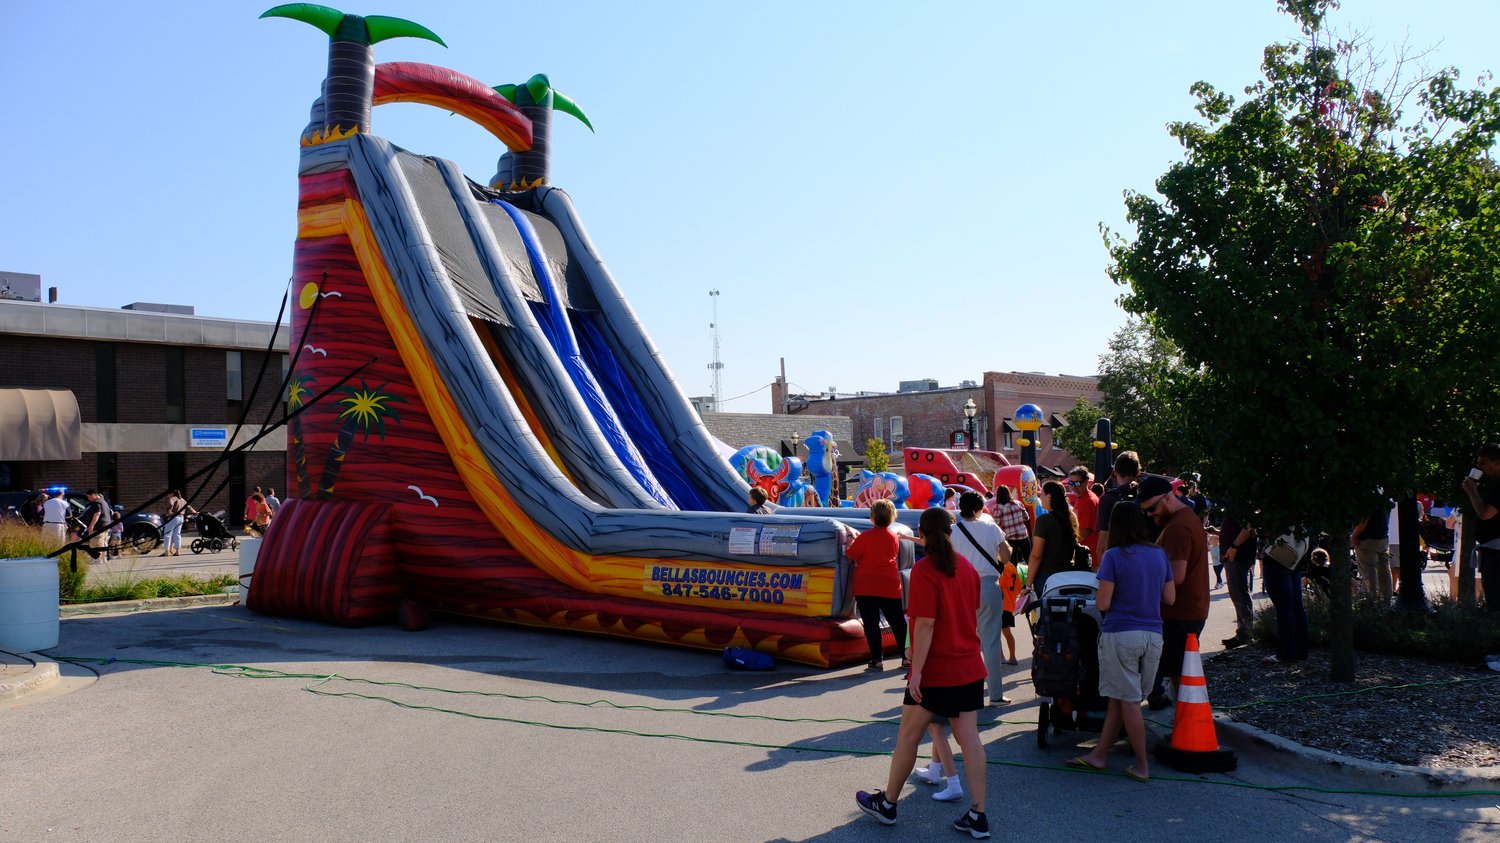 The big inflatable slide.